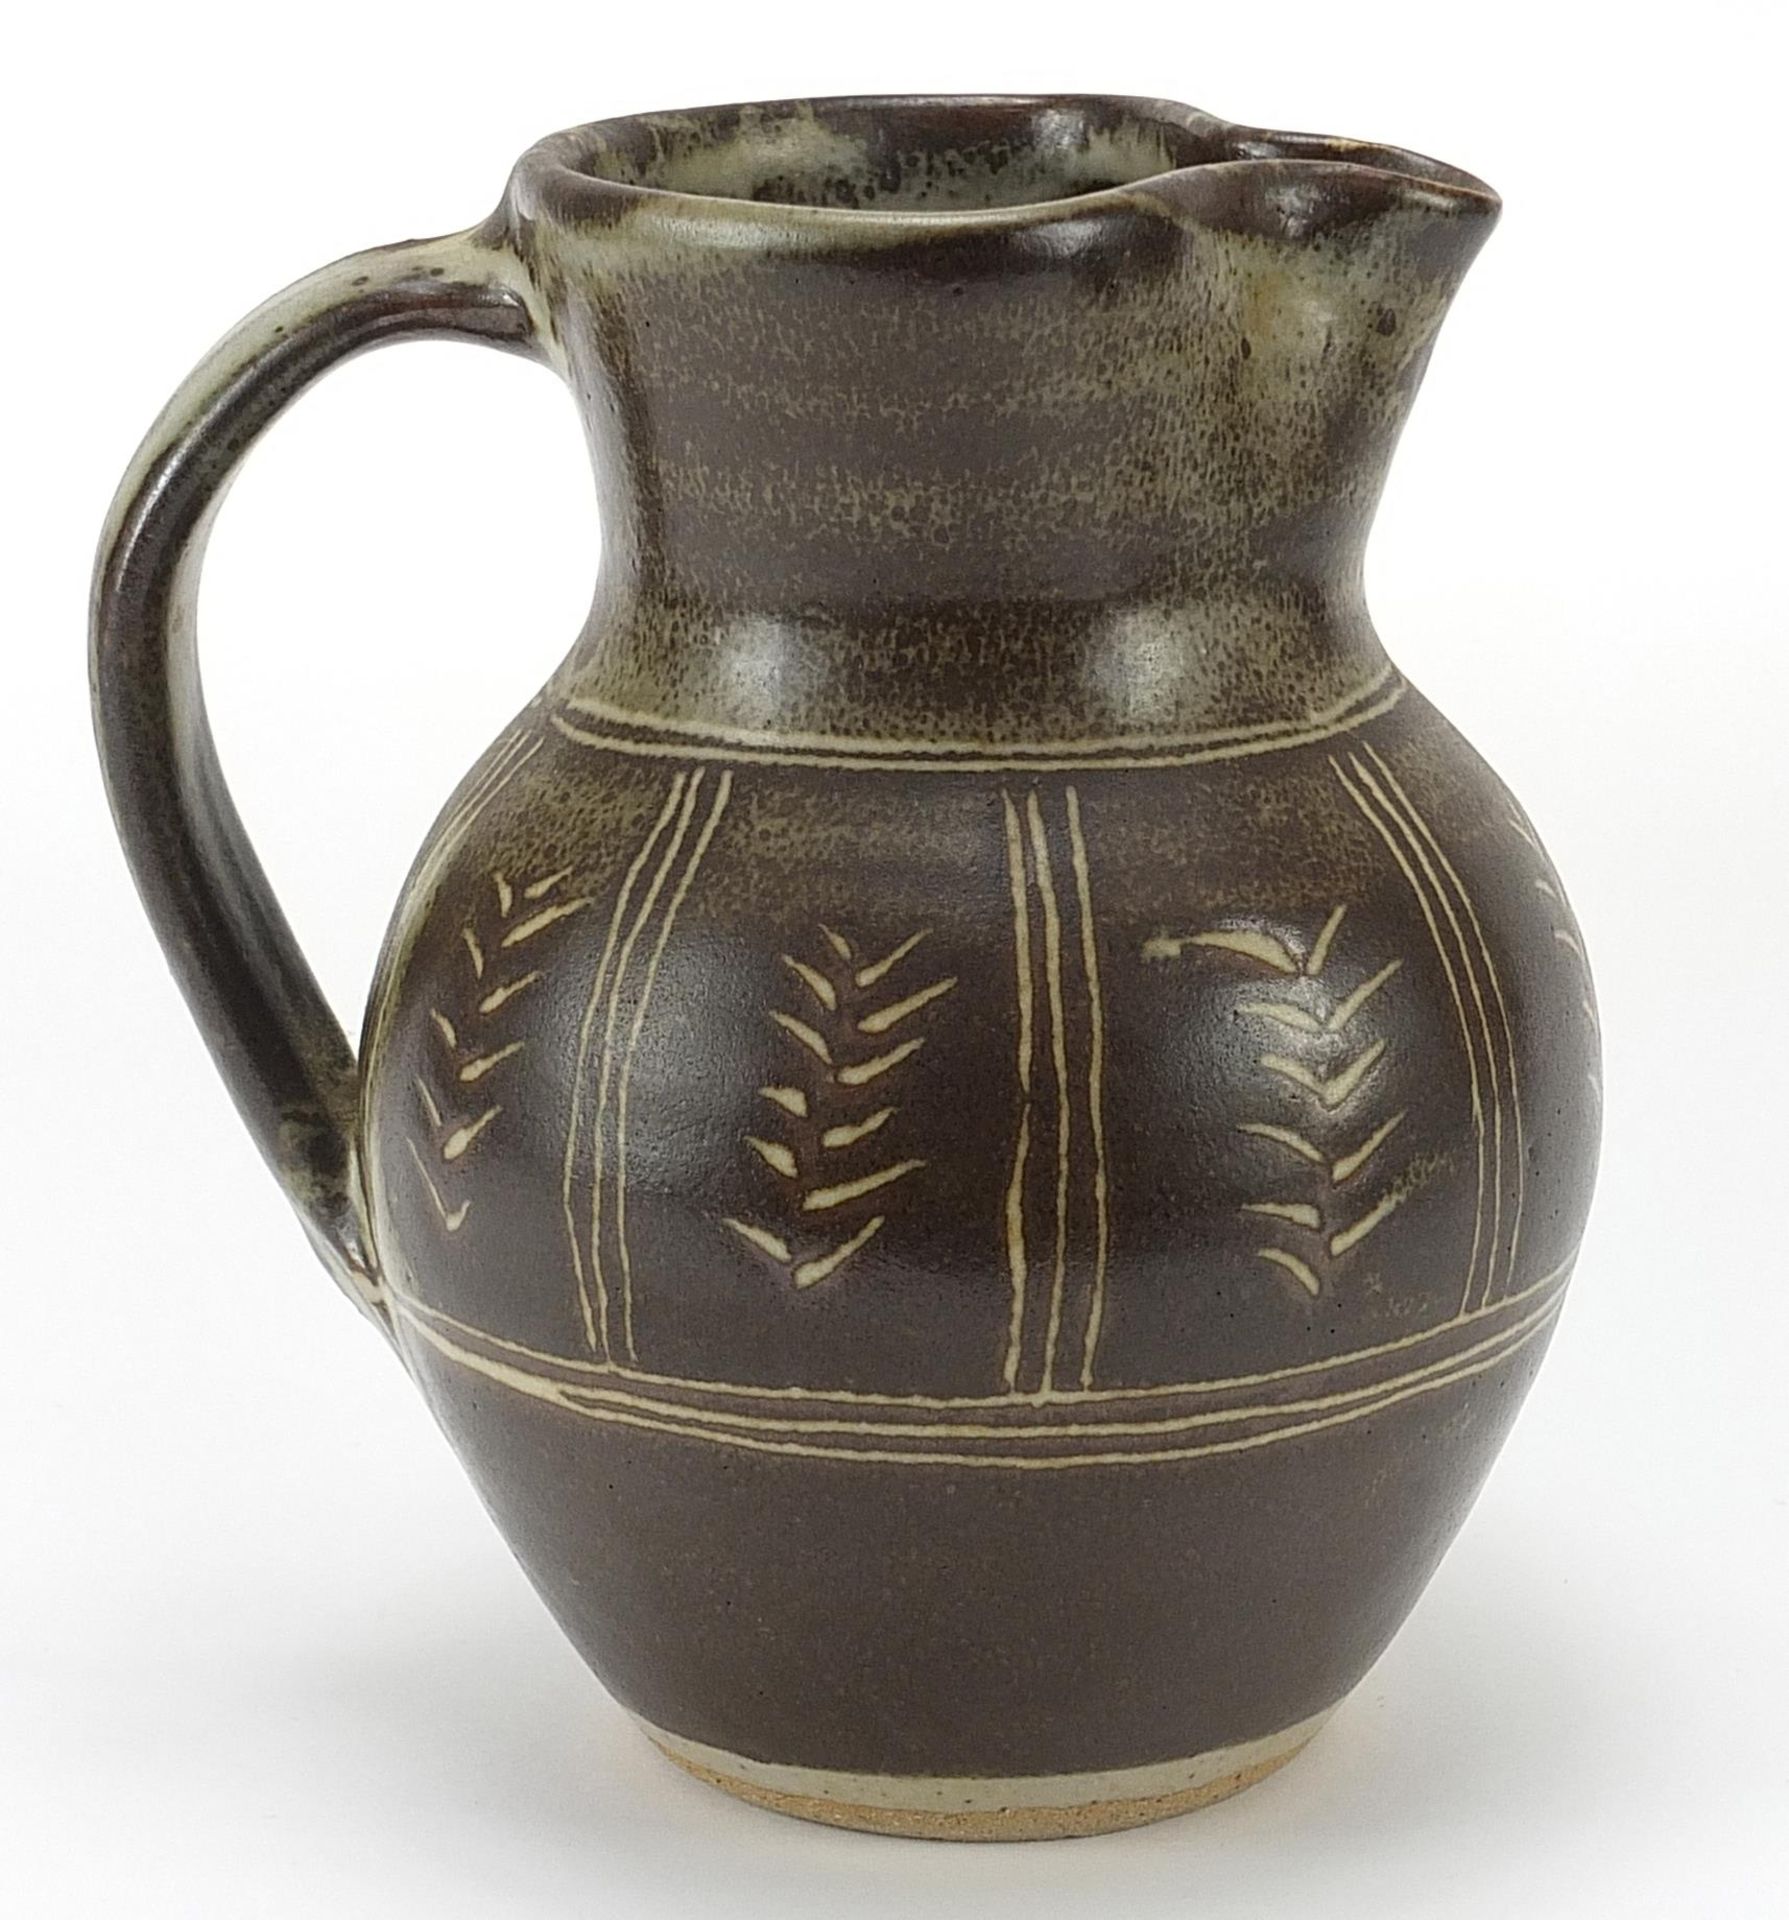 Ursula Mommens studio pottery jug, 18cm high - Image 2 of 3